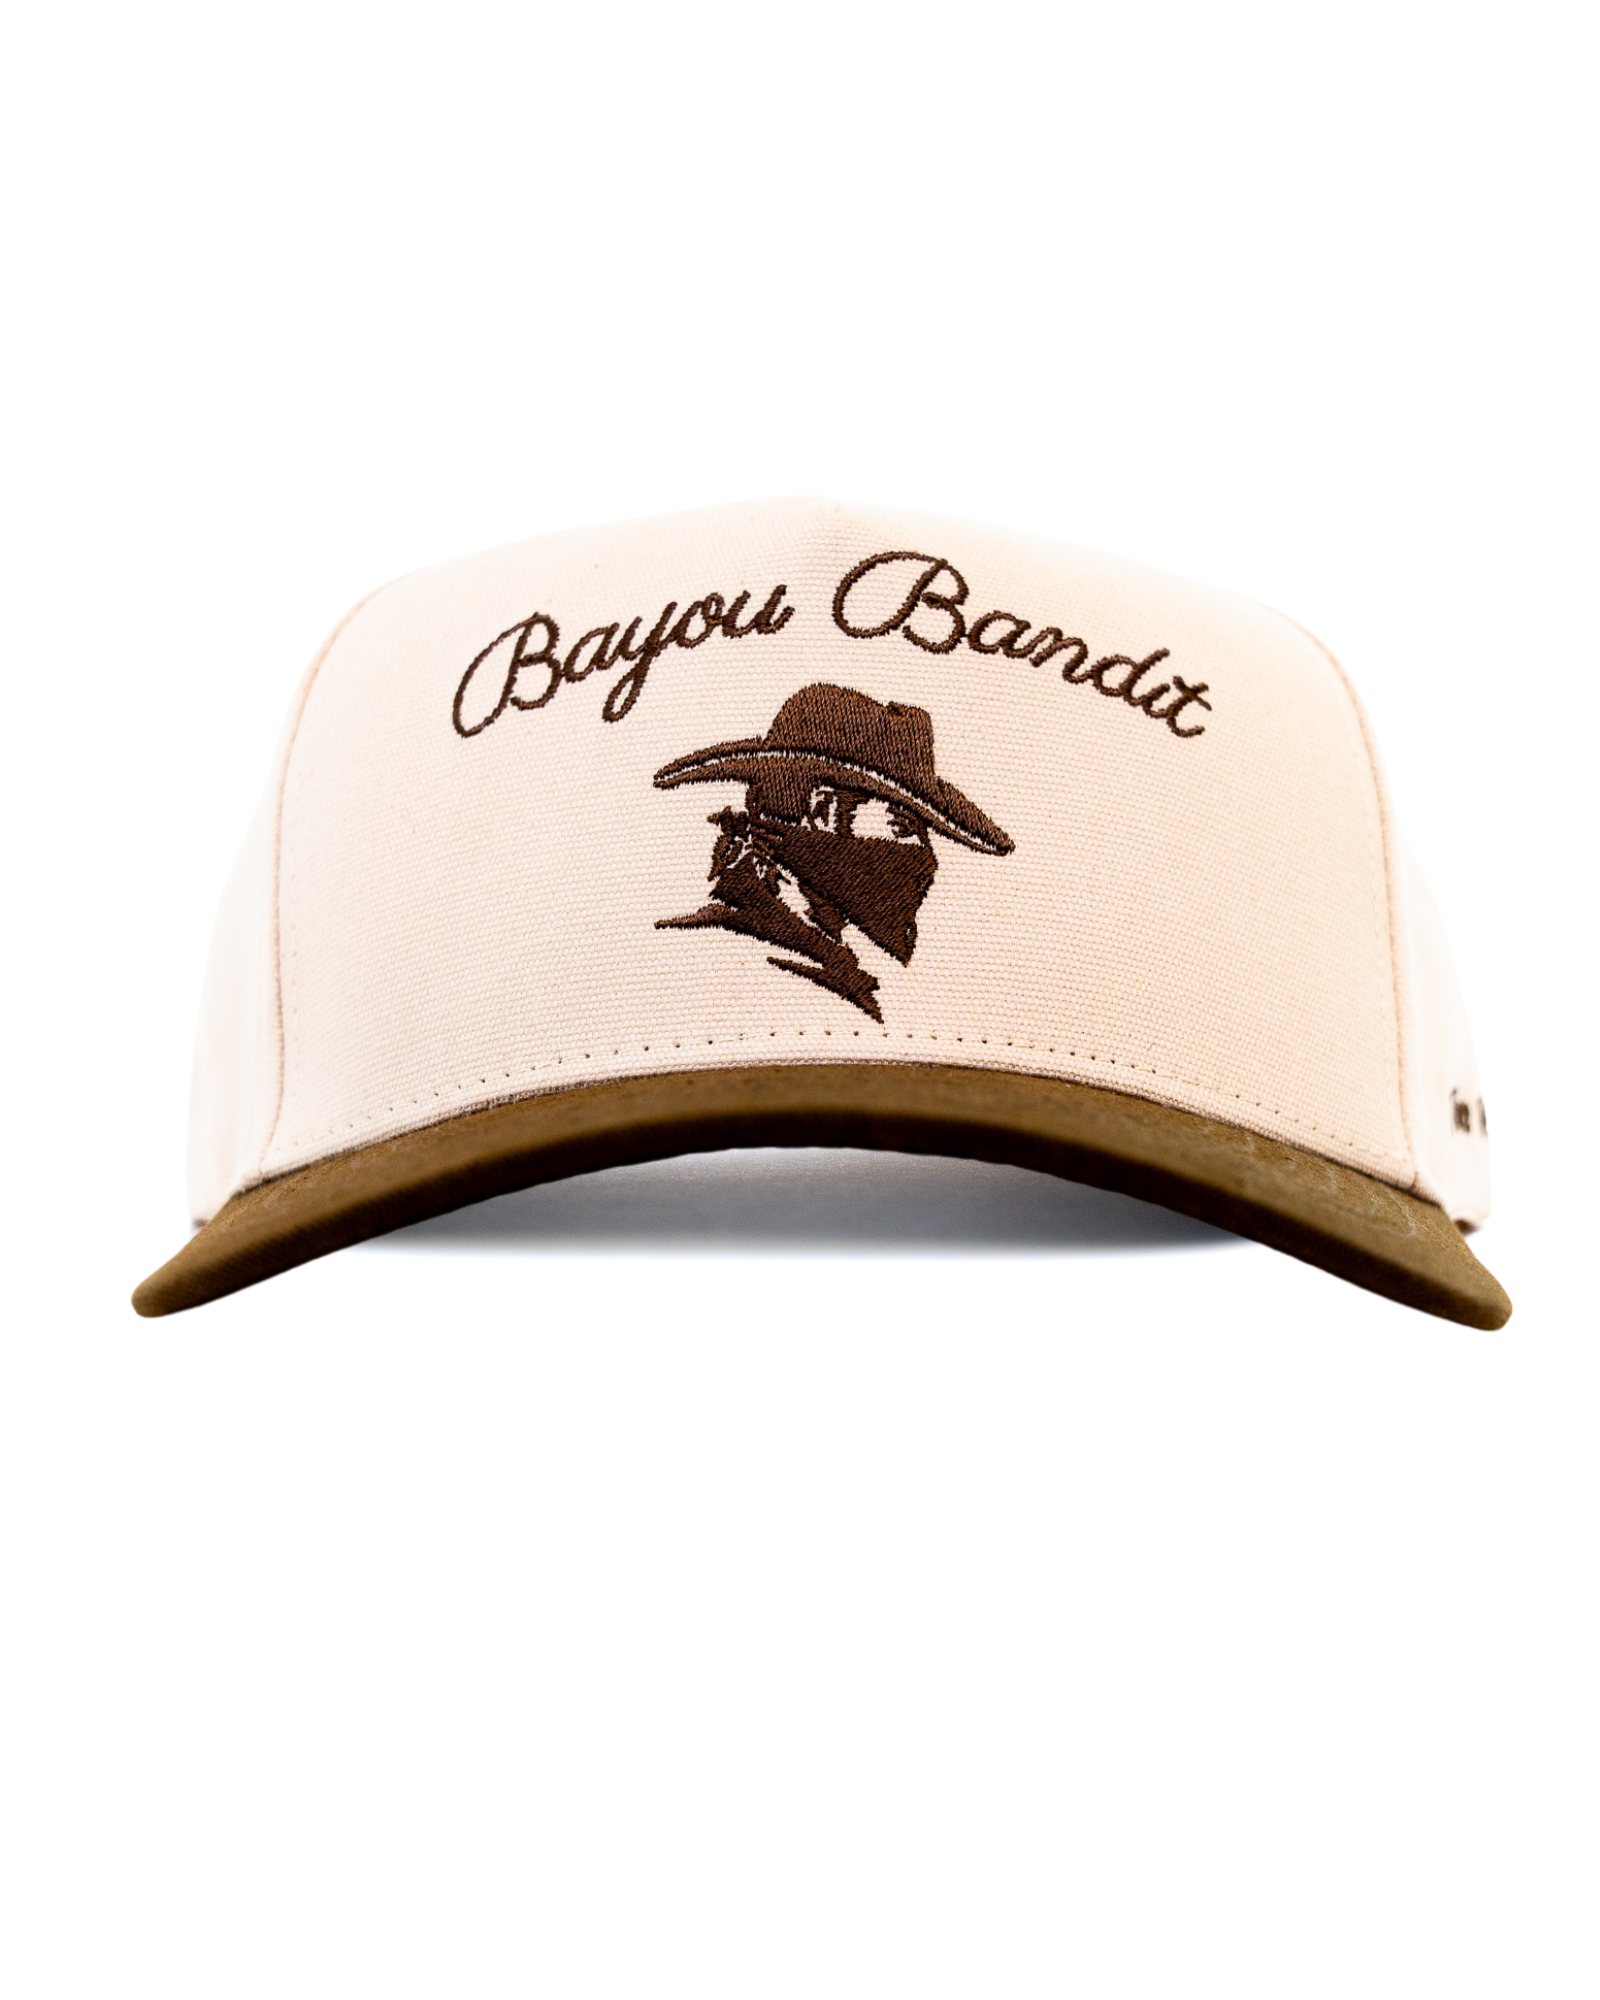 Bayou Bandit Hat